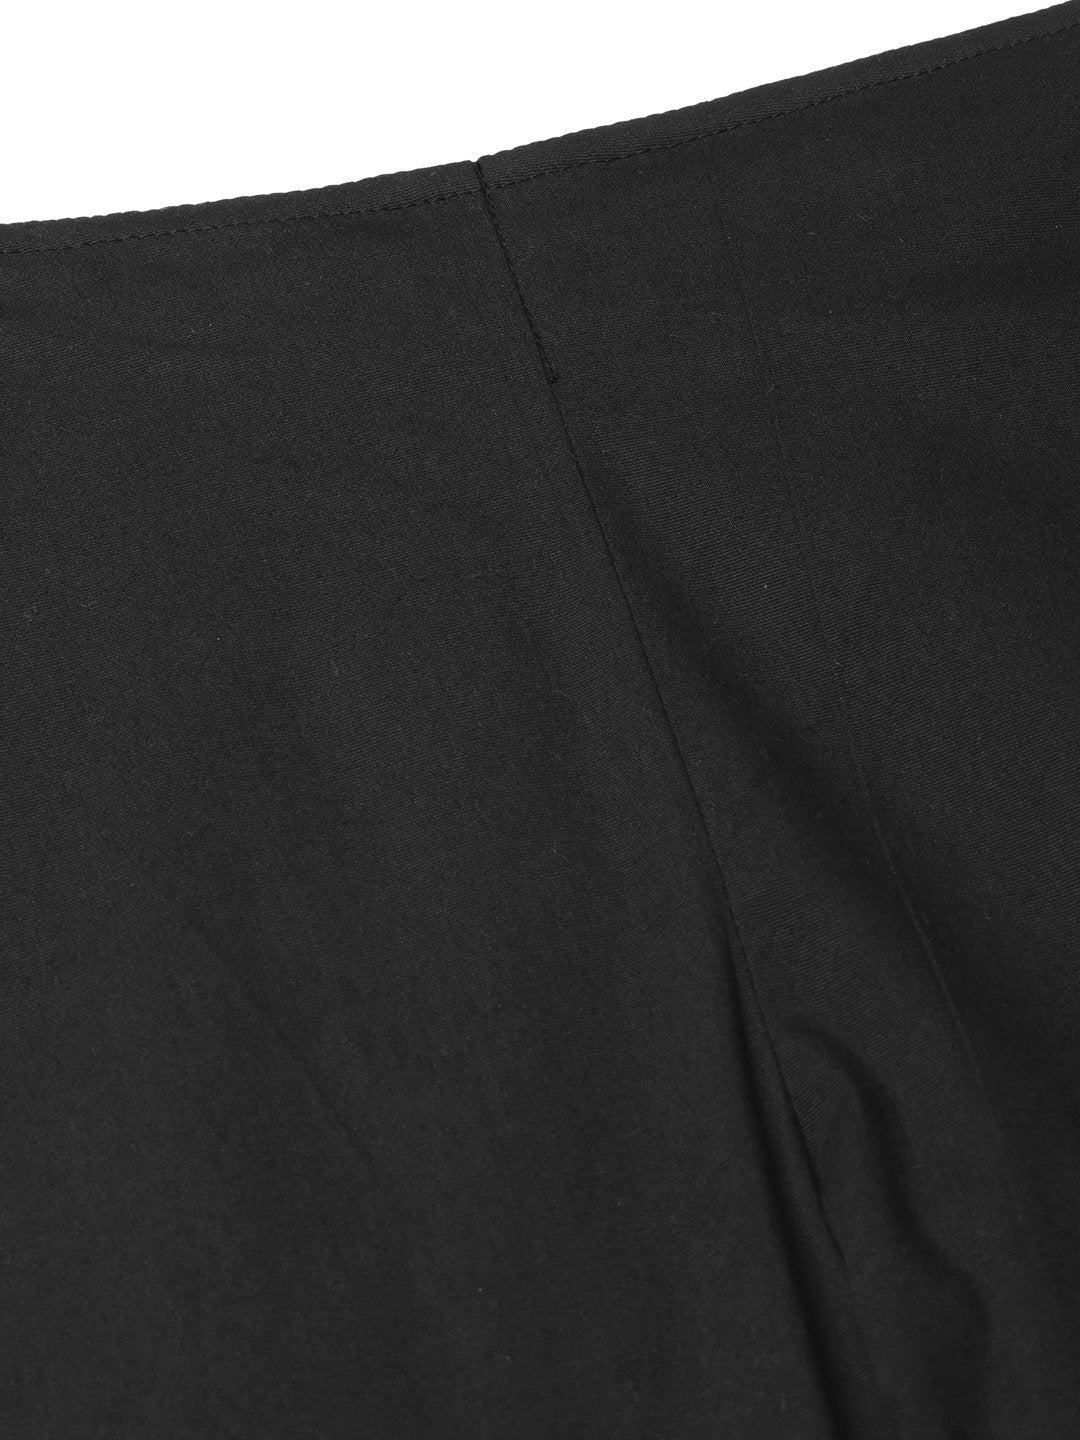 Women's Black Smart Slim Fit Solid Bottom Flared Trousers - Jompers